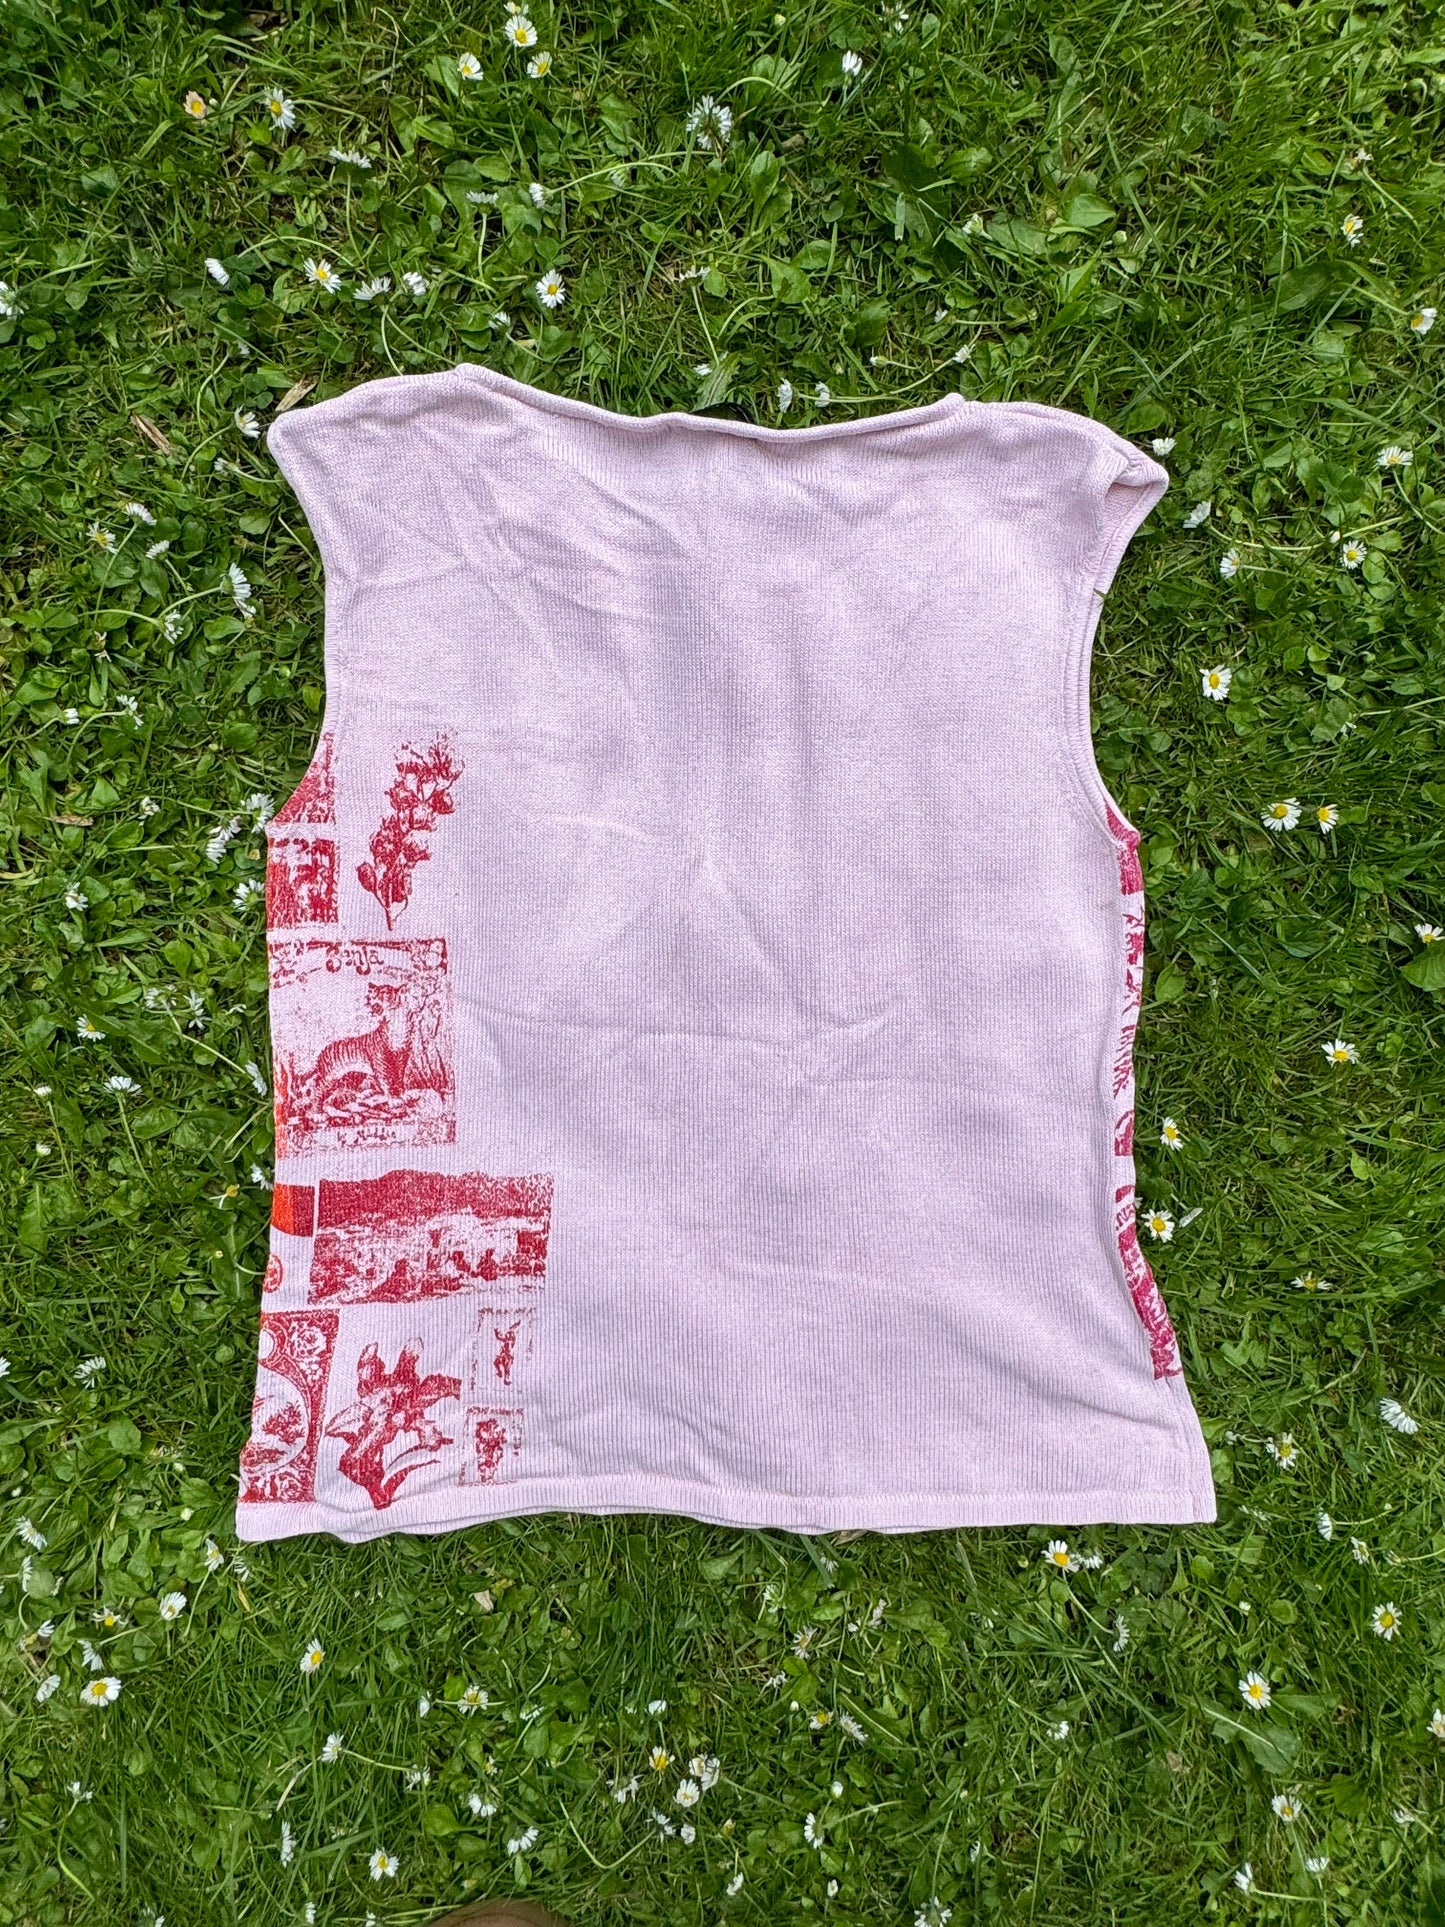 Printed Pink Knit Top